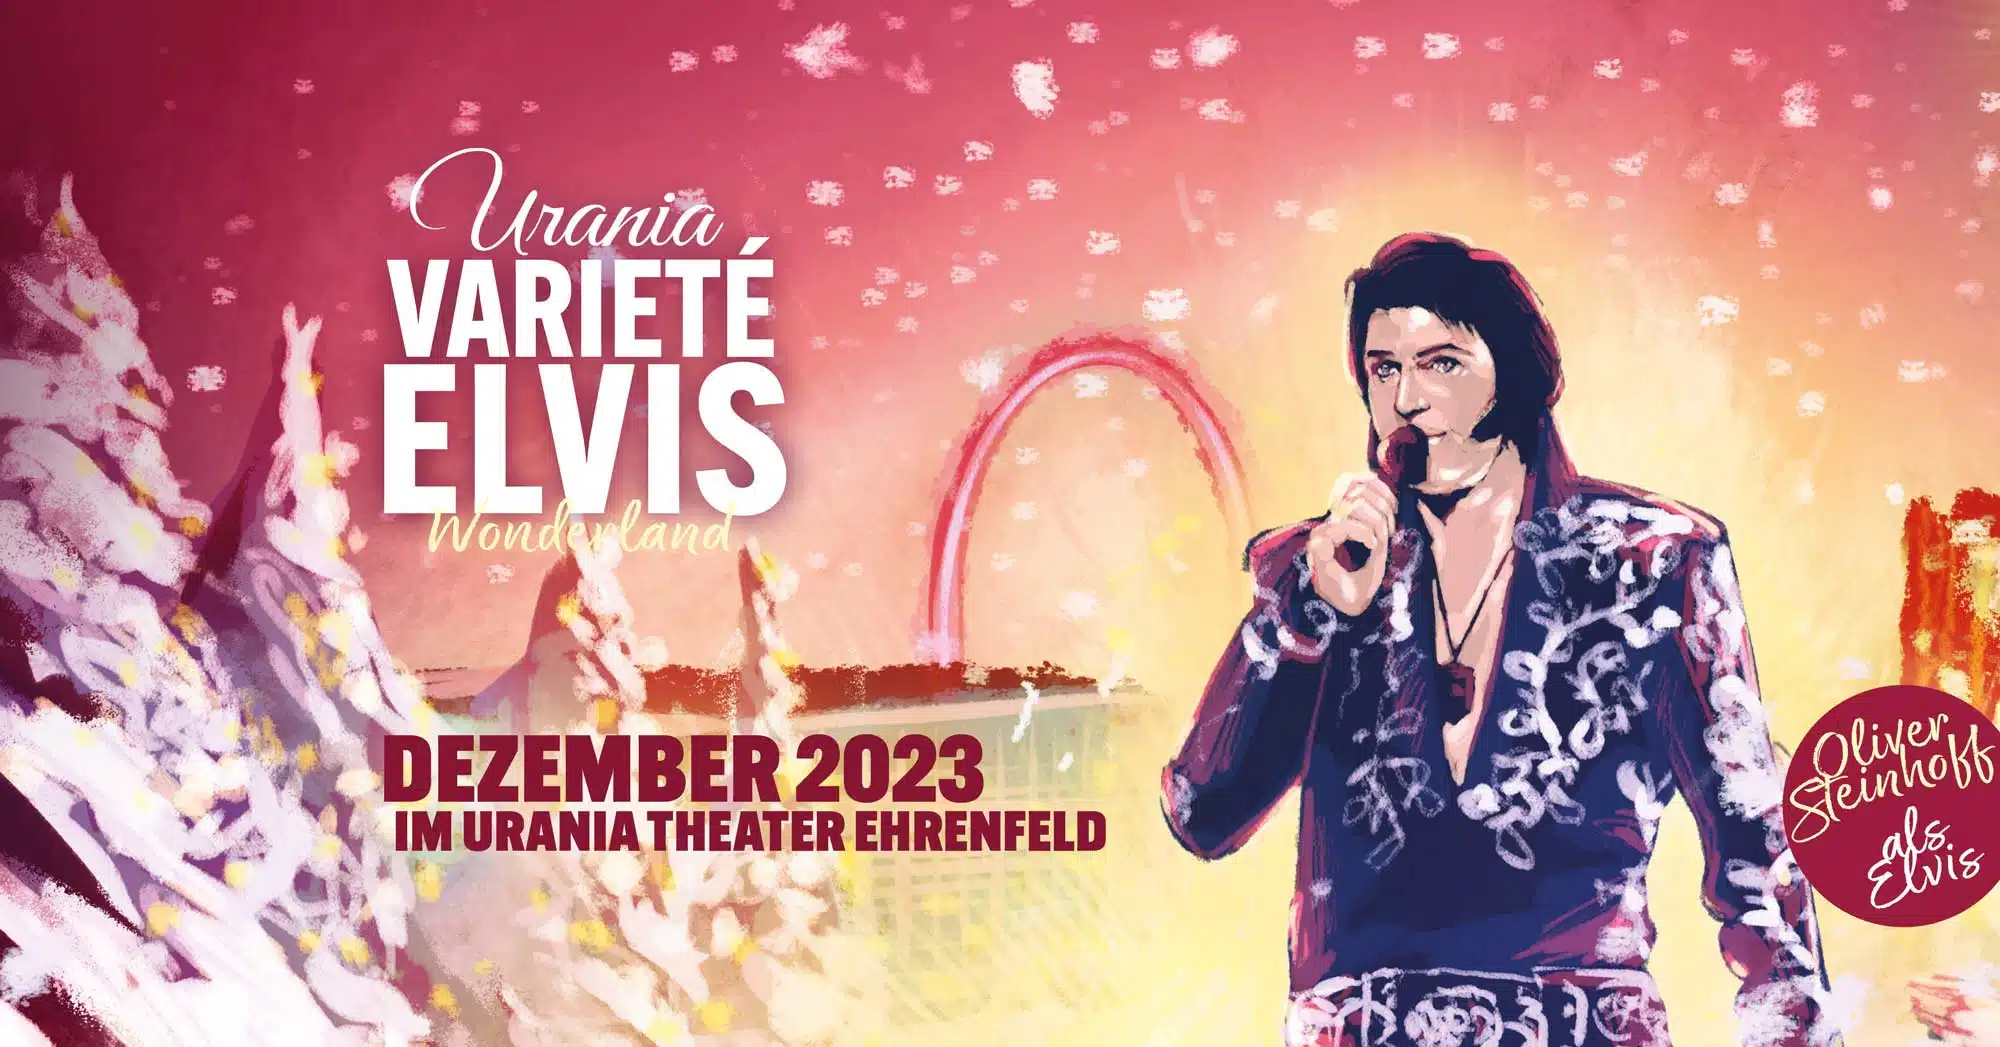 Urania Variete Elvis Wonderland Dezember 202321